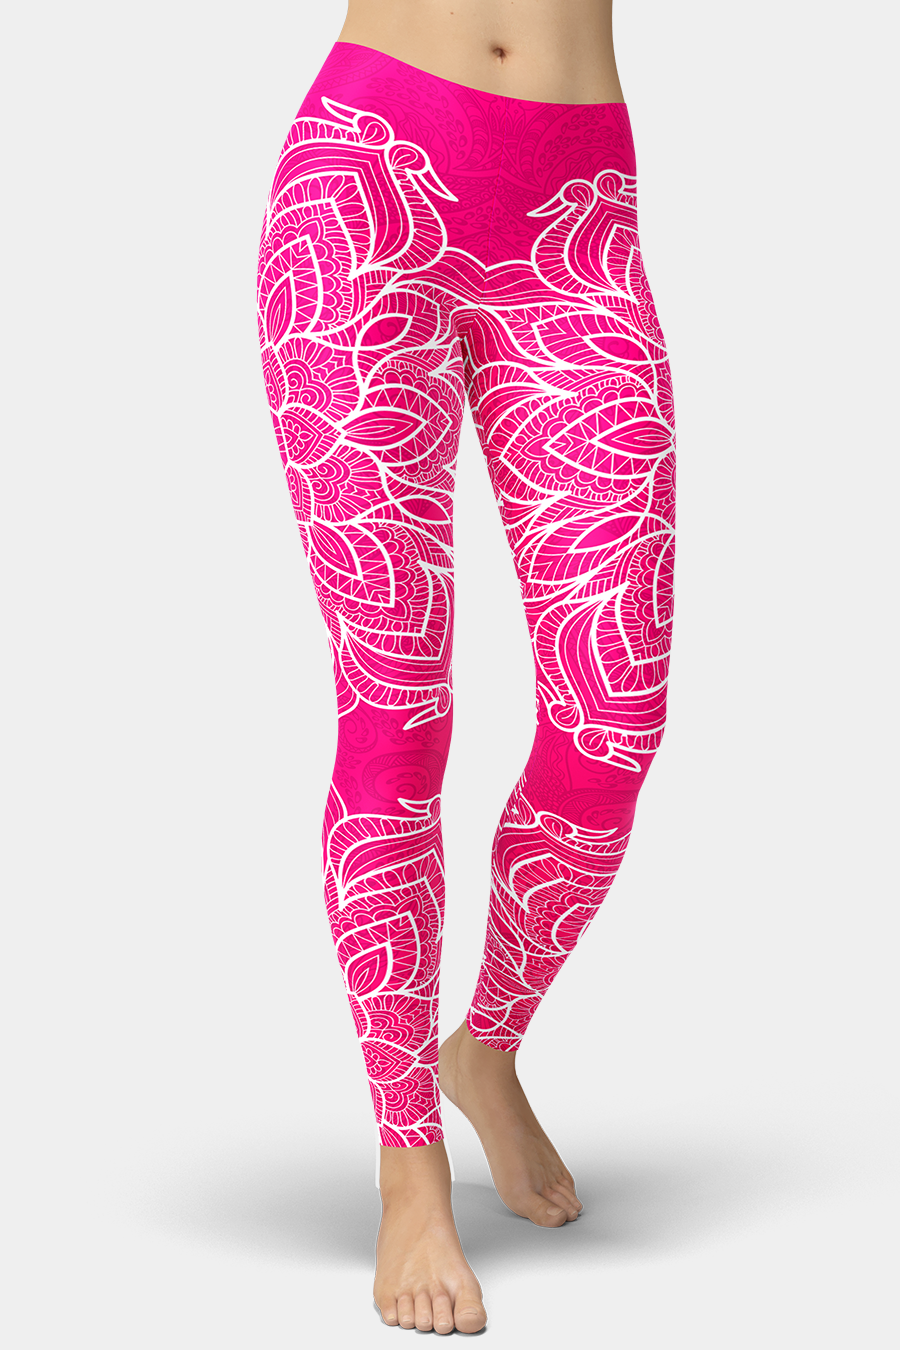 Hot Pink Mandala Leggings - SeeMyLeggings